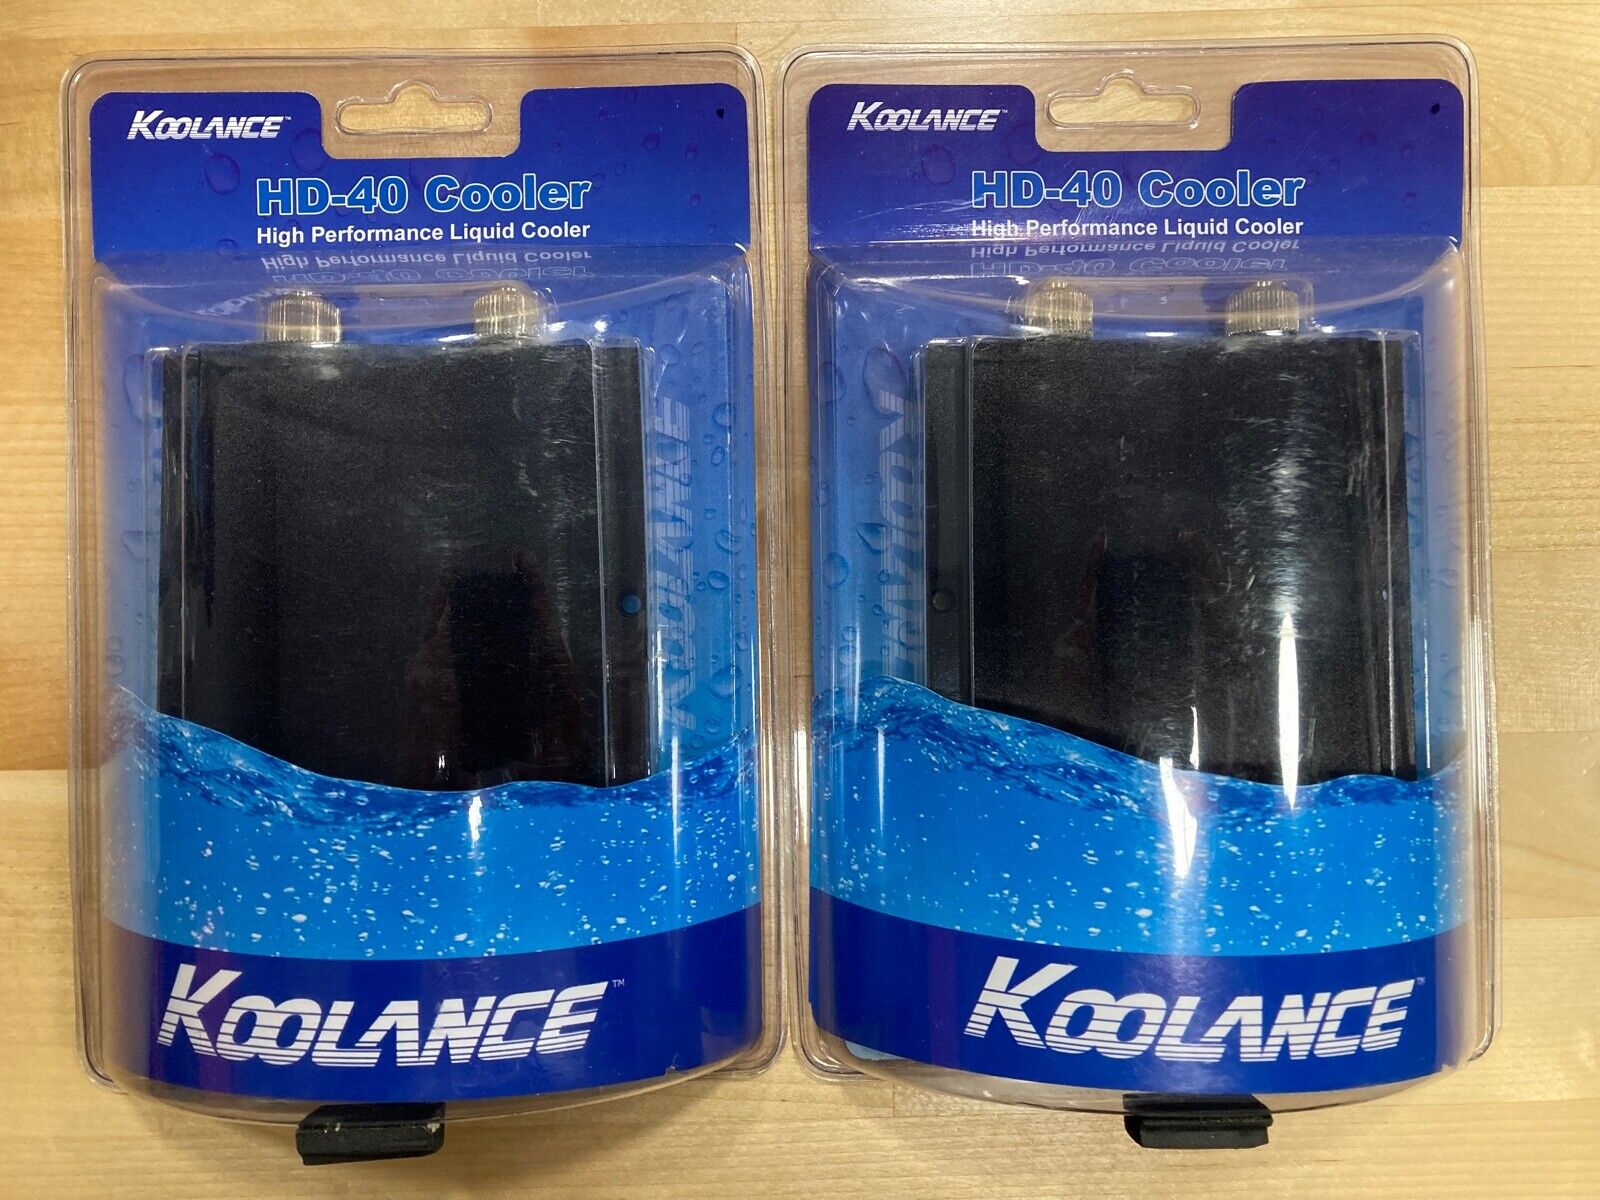 2 Koolance HD-40 Hard Drive Liquid Coolers